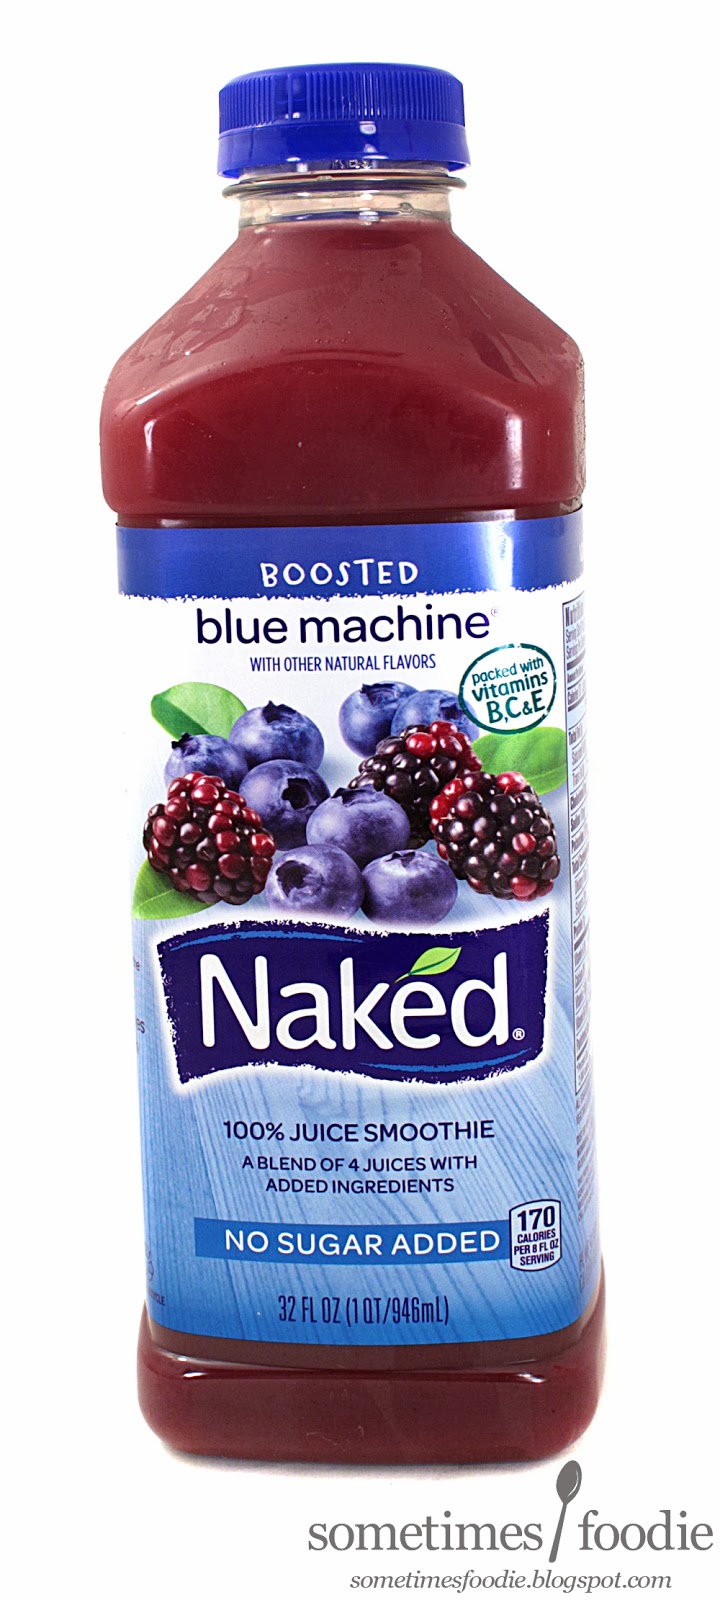 Sometimes Foodie: Naked Blue Machine - Aldi: Cherry Hill, NJ